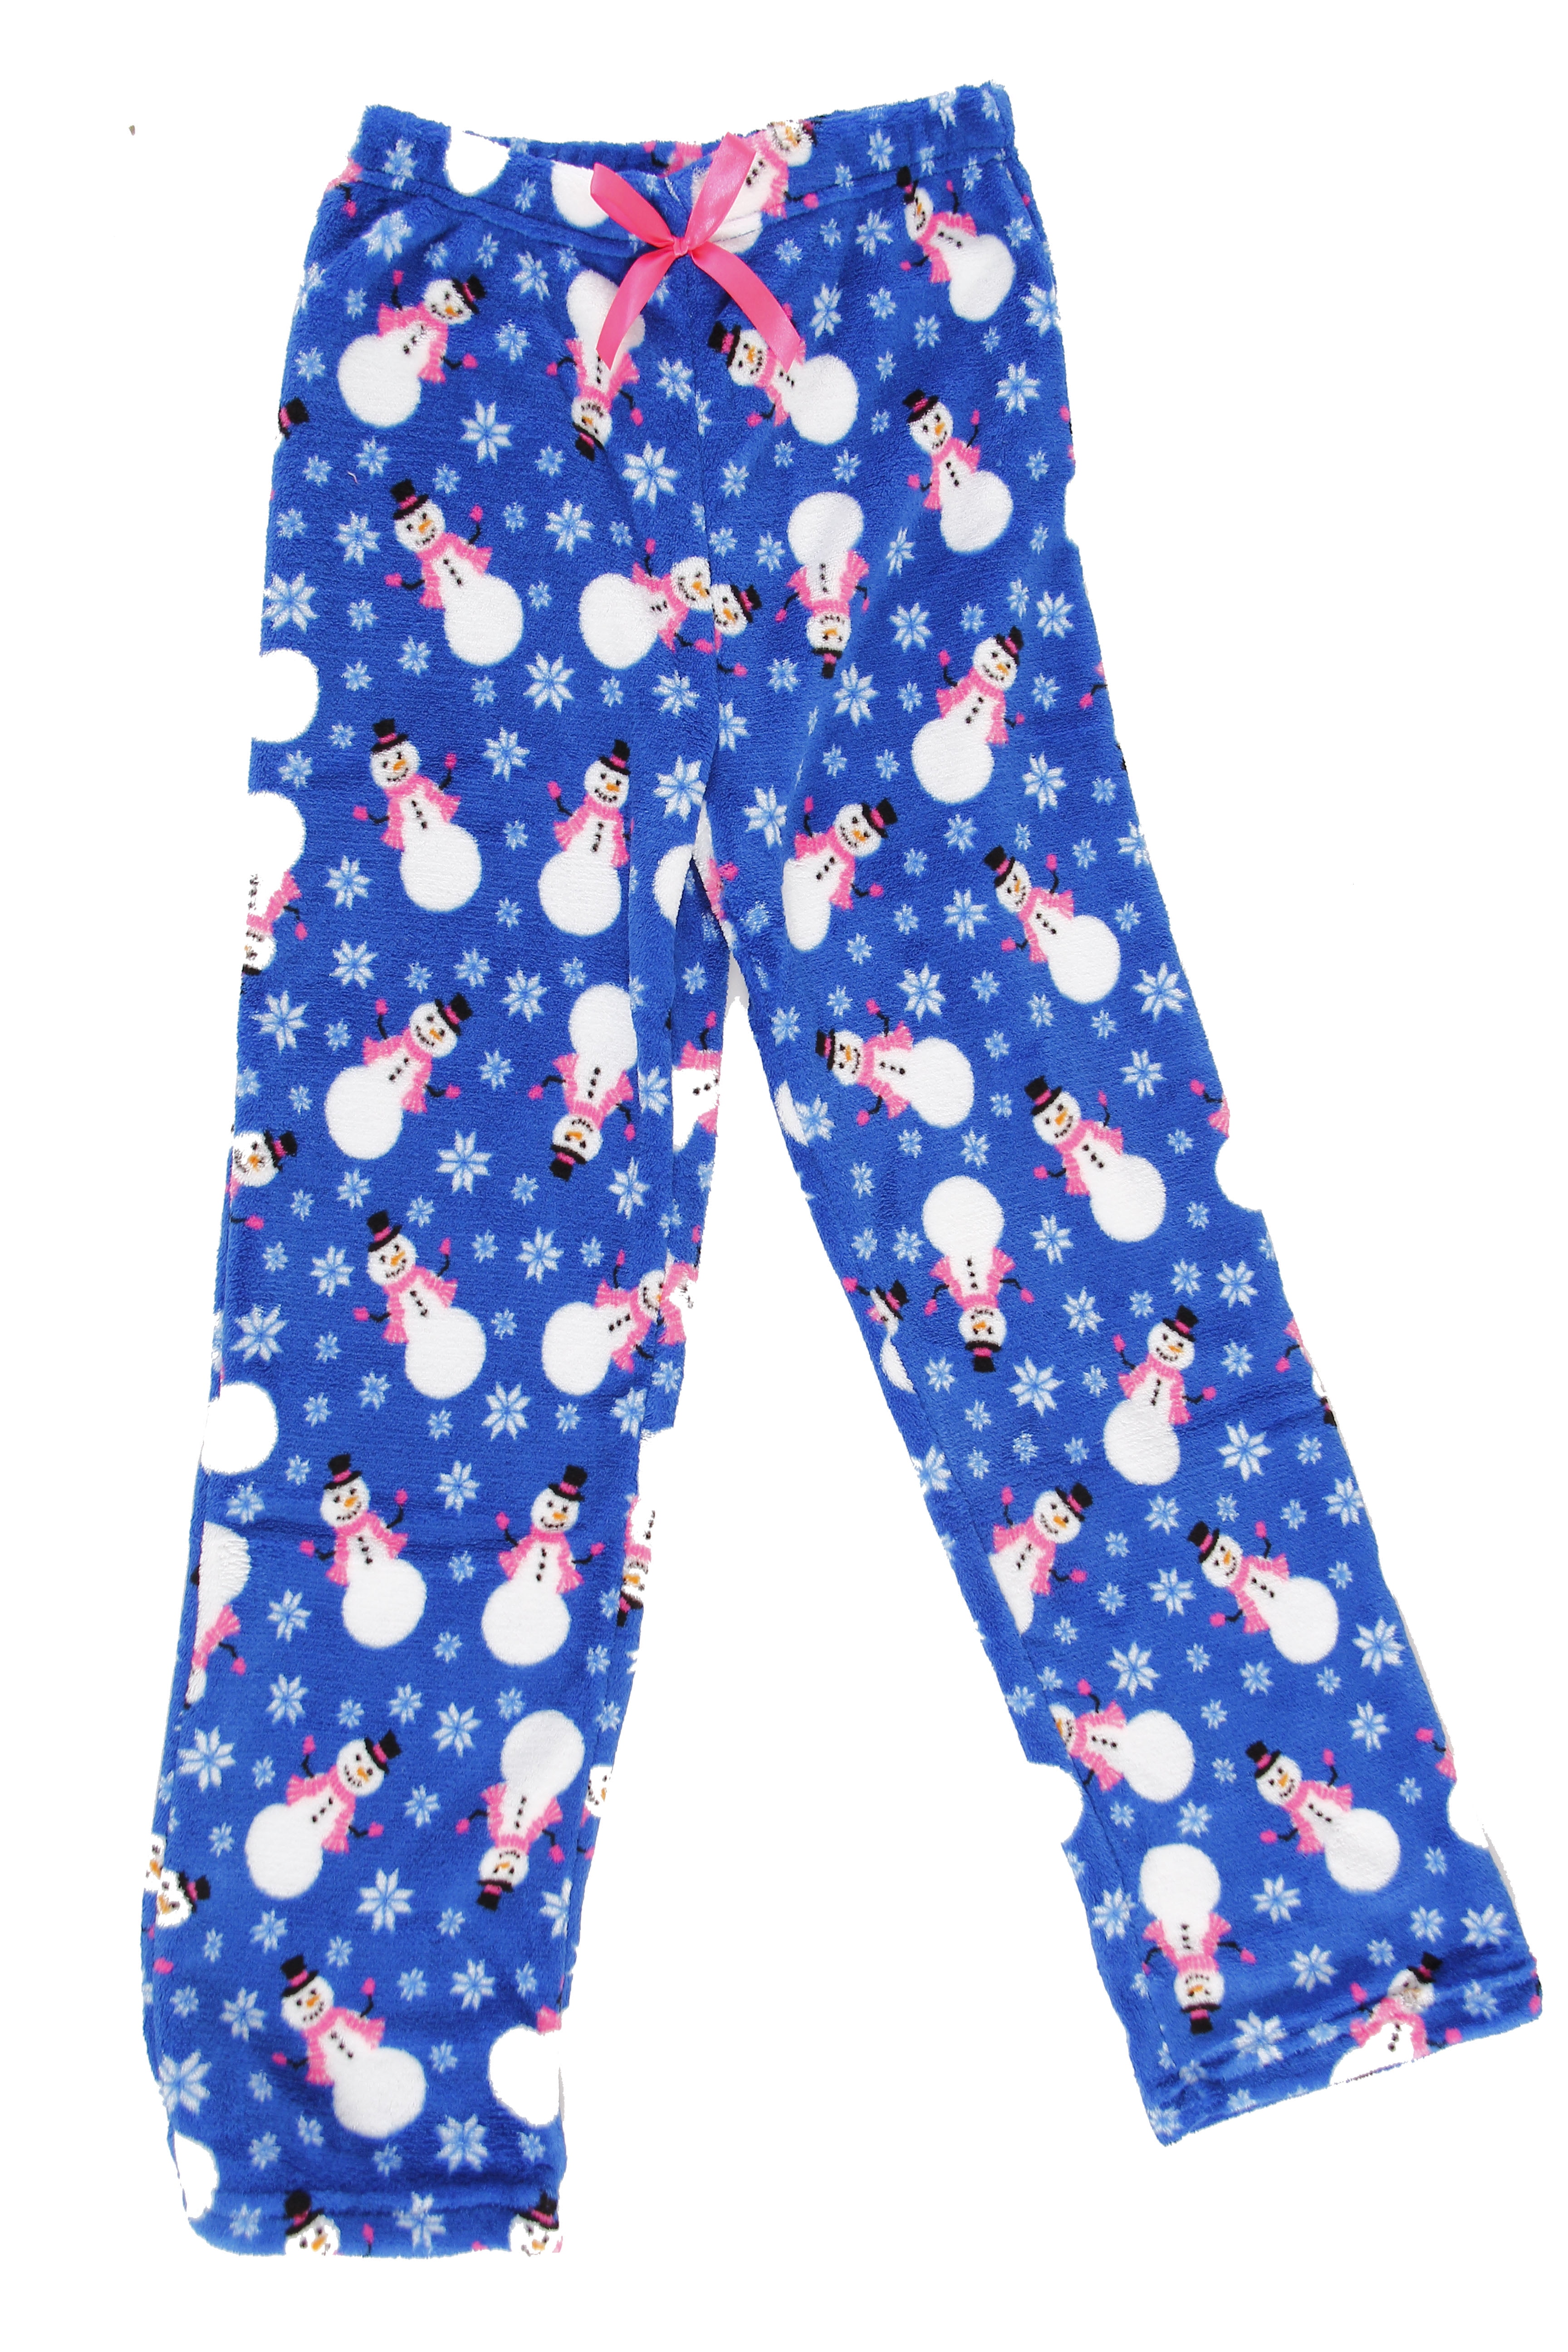 Just Love Plush Pajama Pants for Girls - Fleece PJs 45500-10118